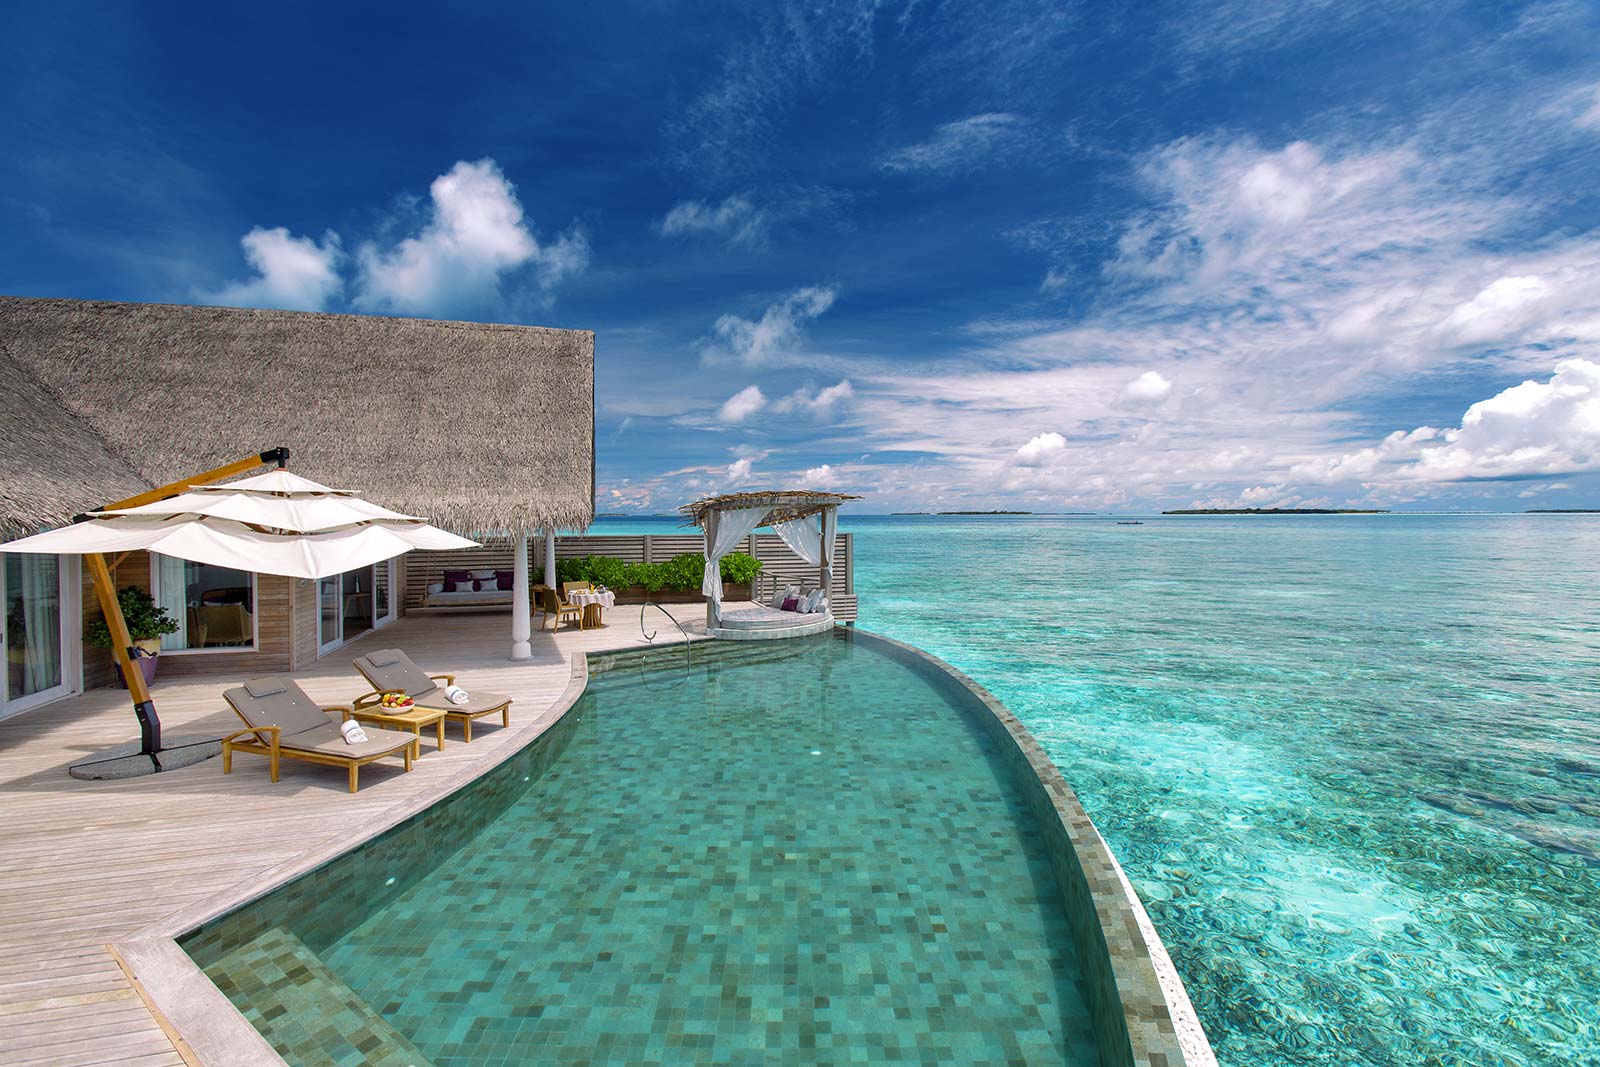 Milaidhoo Island Maldives 
Best Maldives resort 2022 Nominee